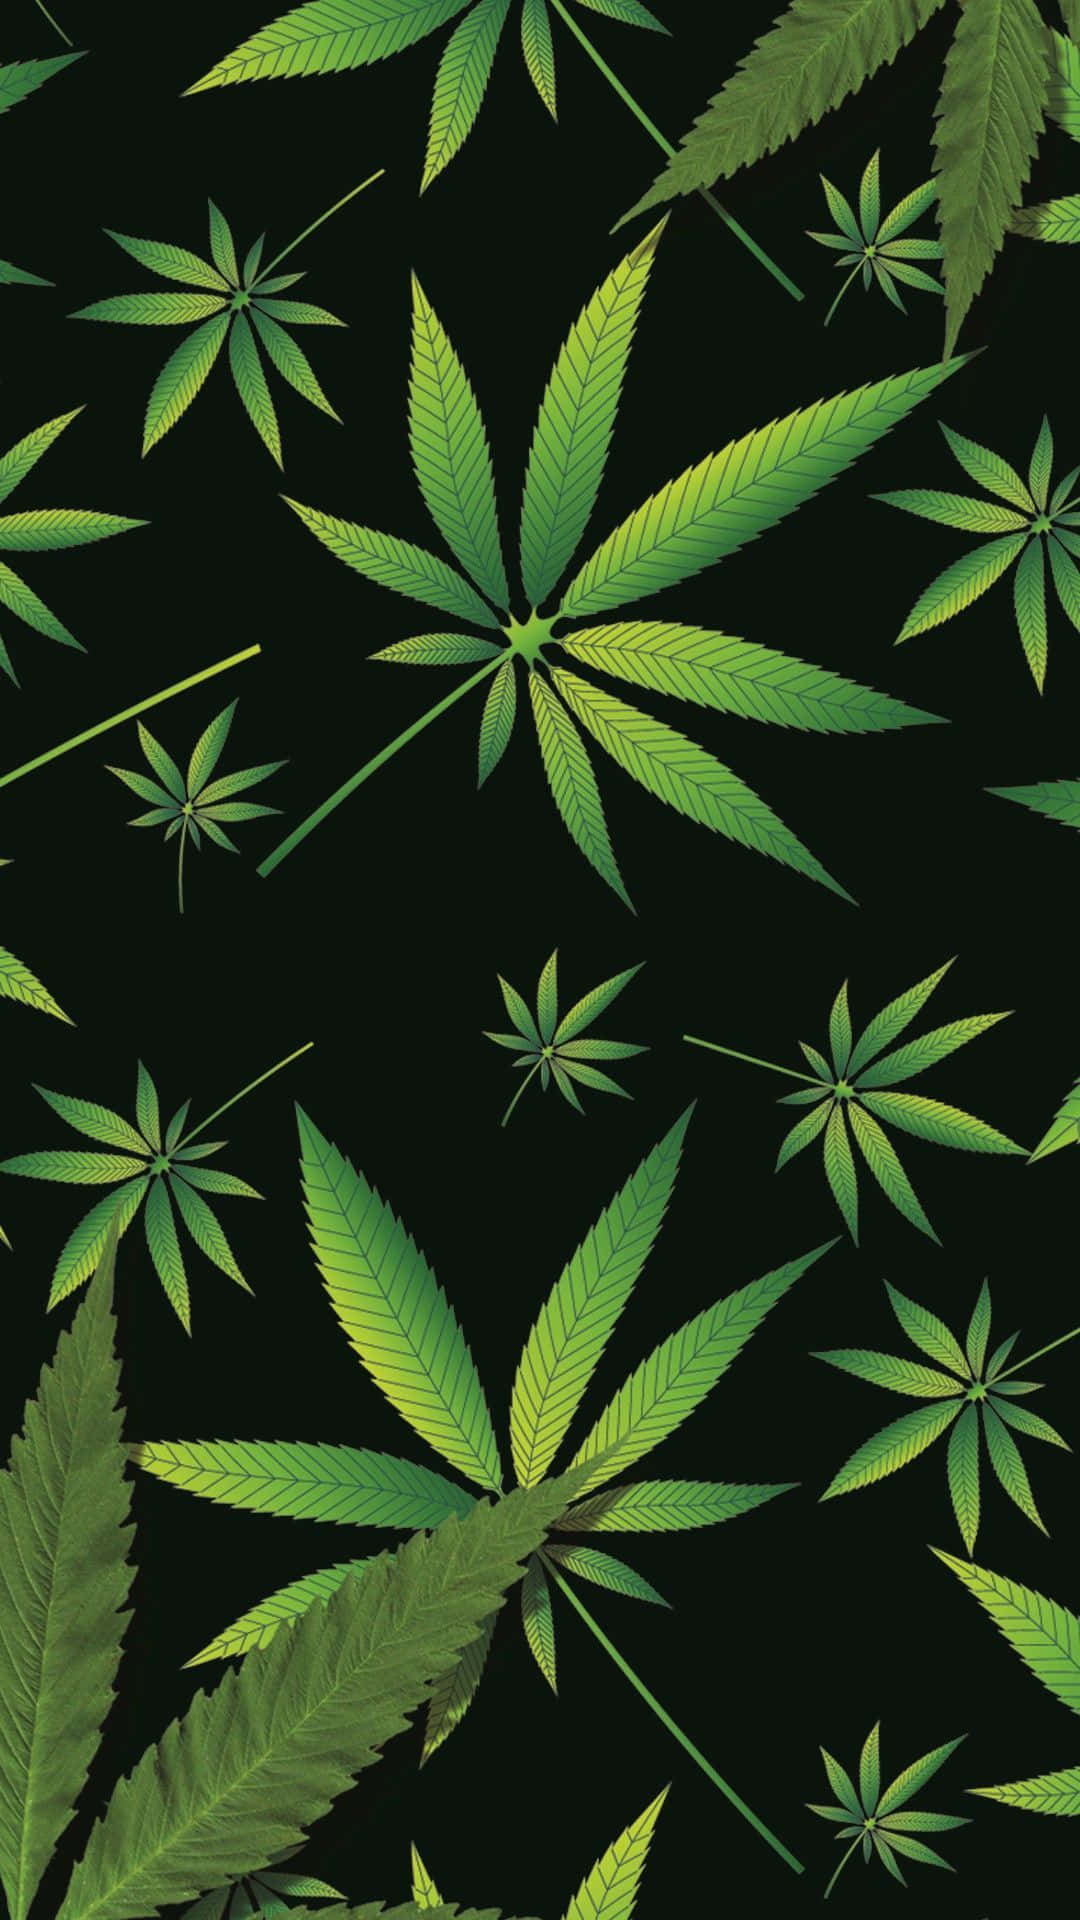 Real Marijuana Leaf On Poster Background